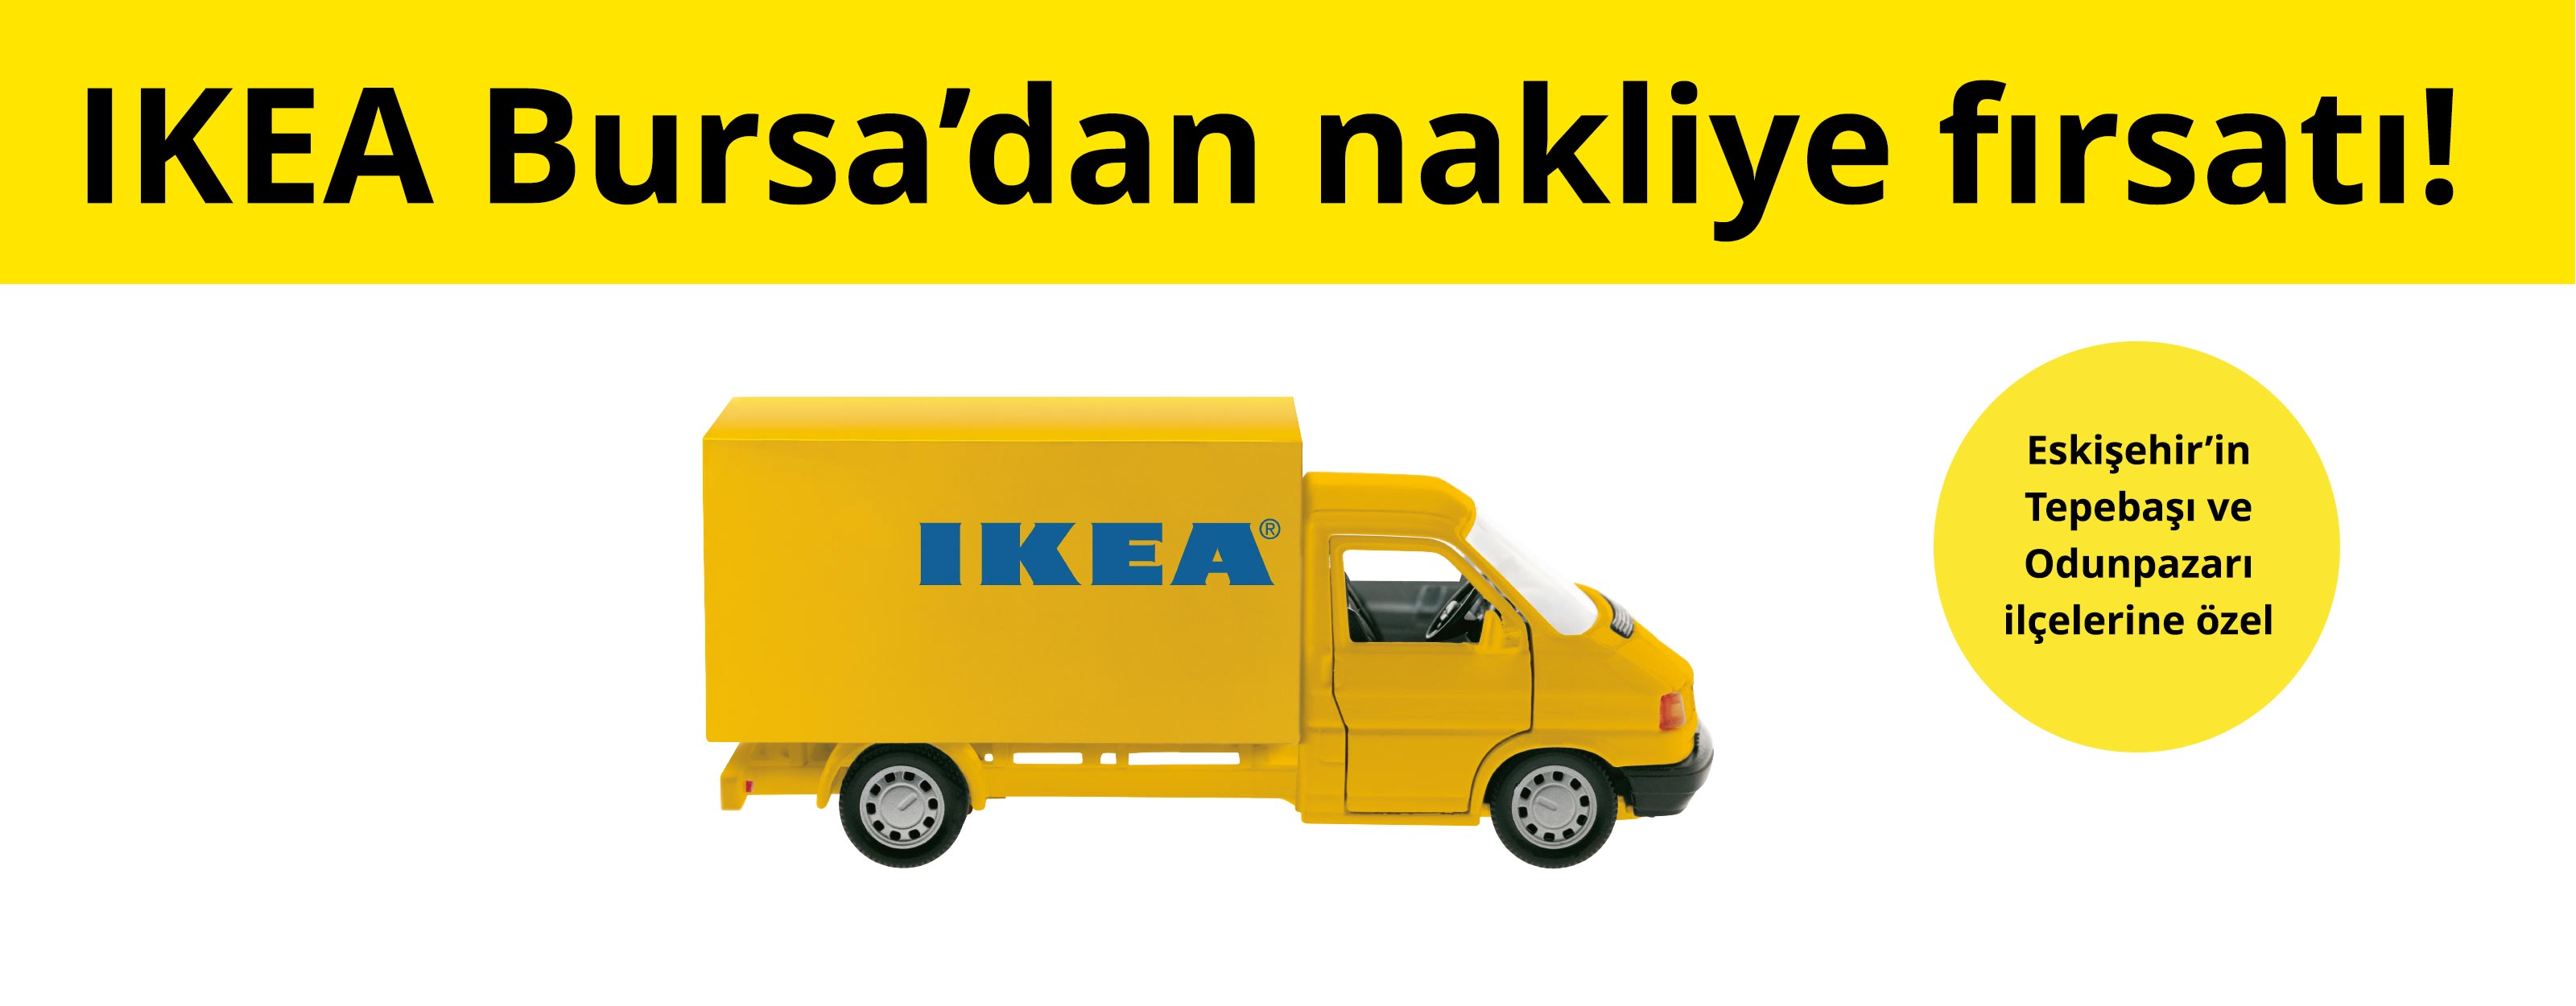 IKEA-ikea bursa eskisehir nakliye kampanyasi agustos detay tr